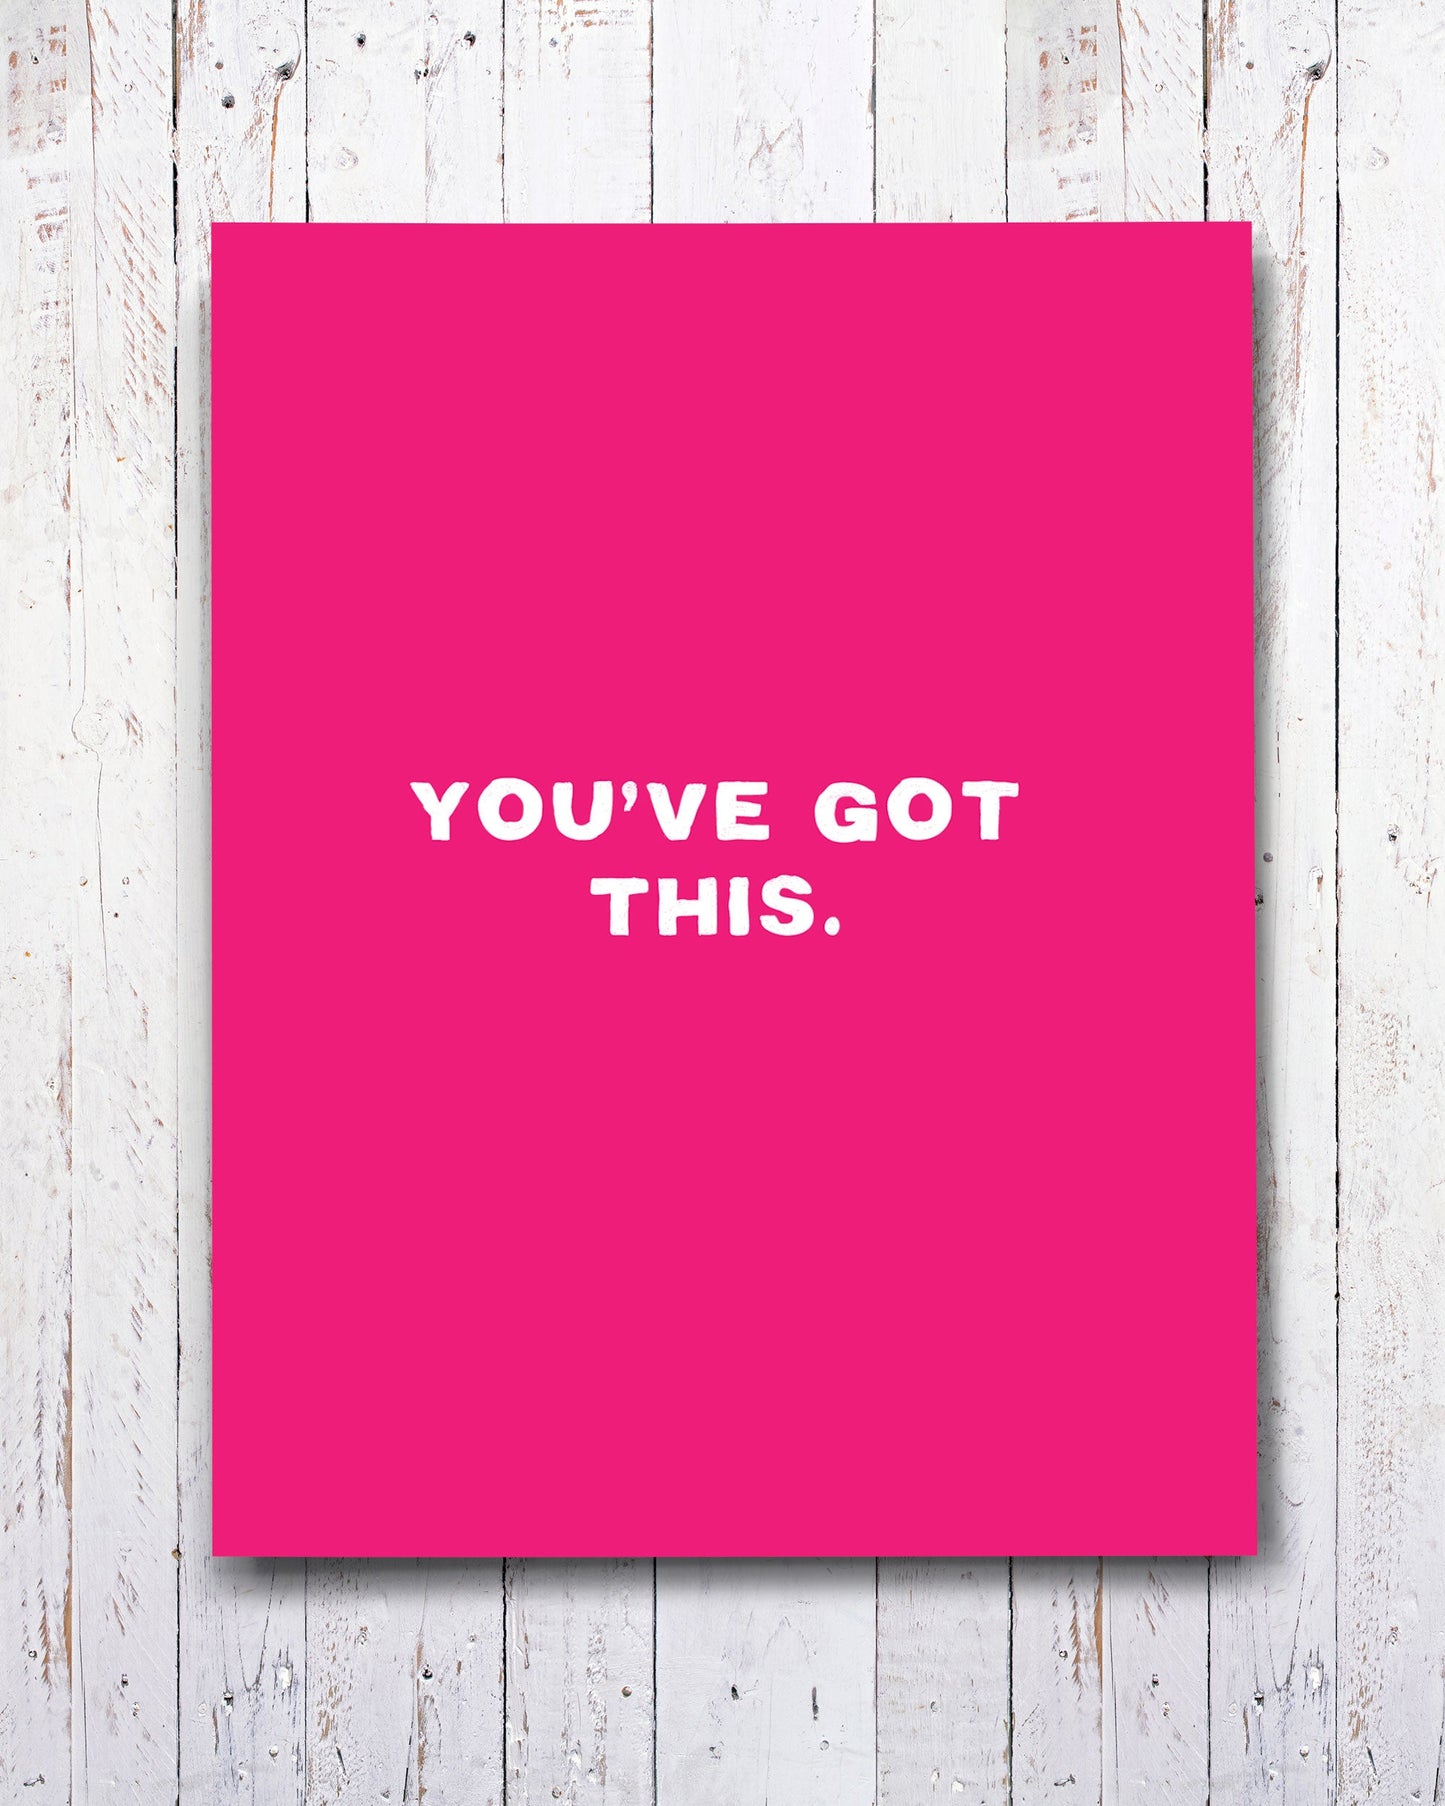 You’ve Got This Encouragement Card in pink - Transit Design - Smirkantile